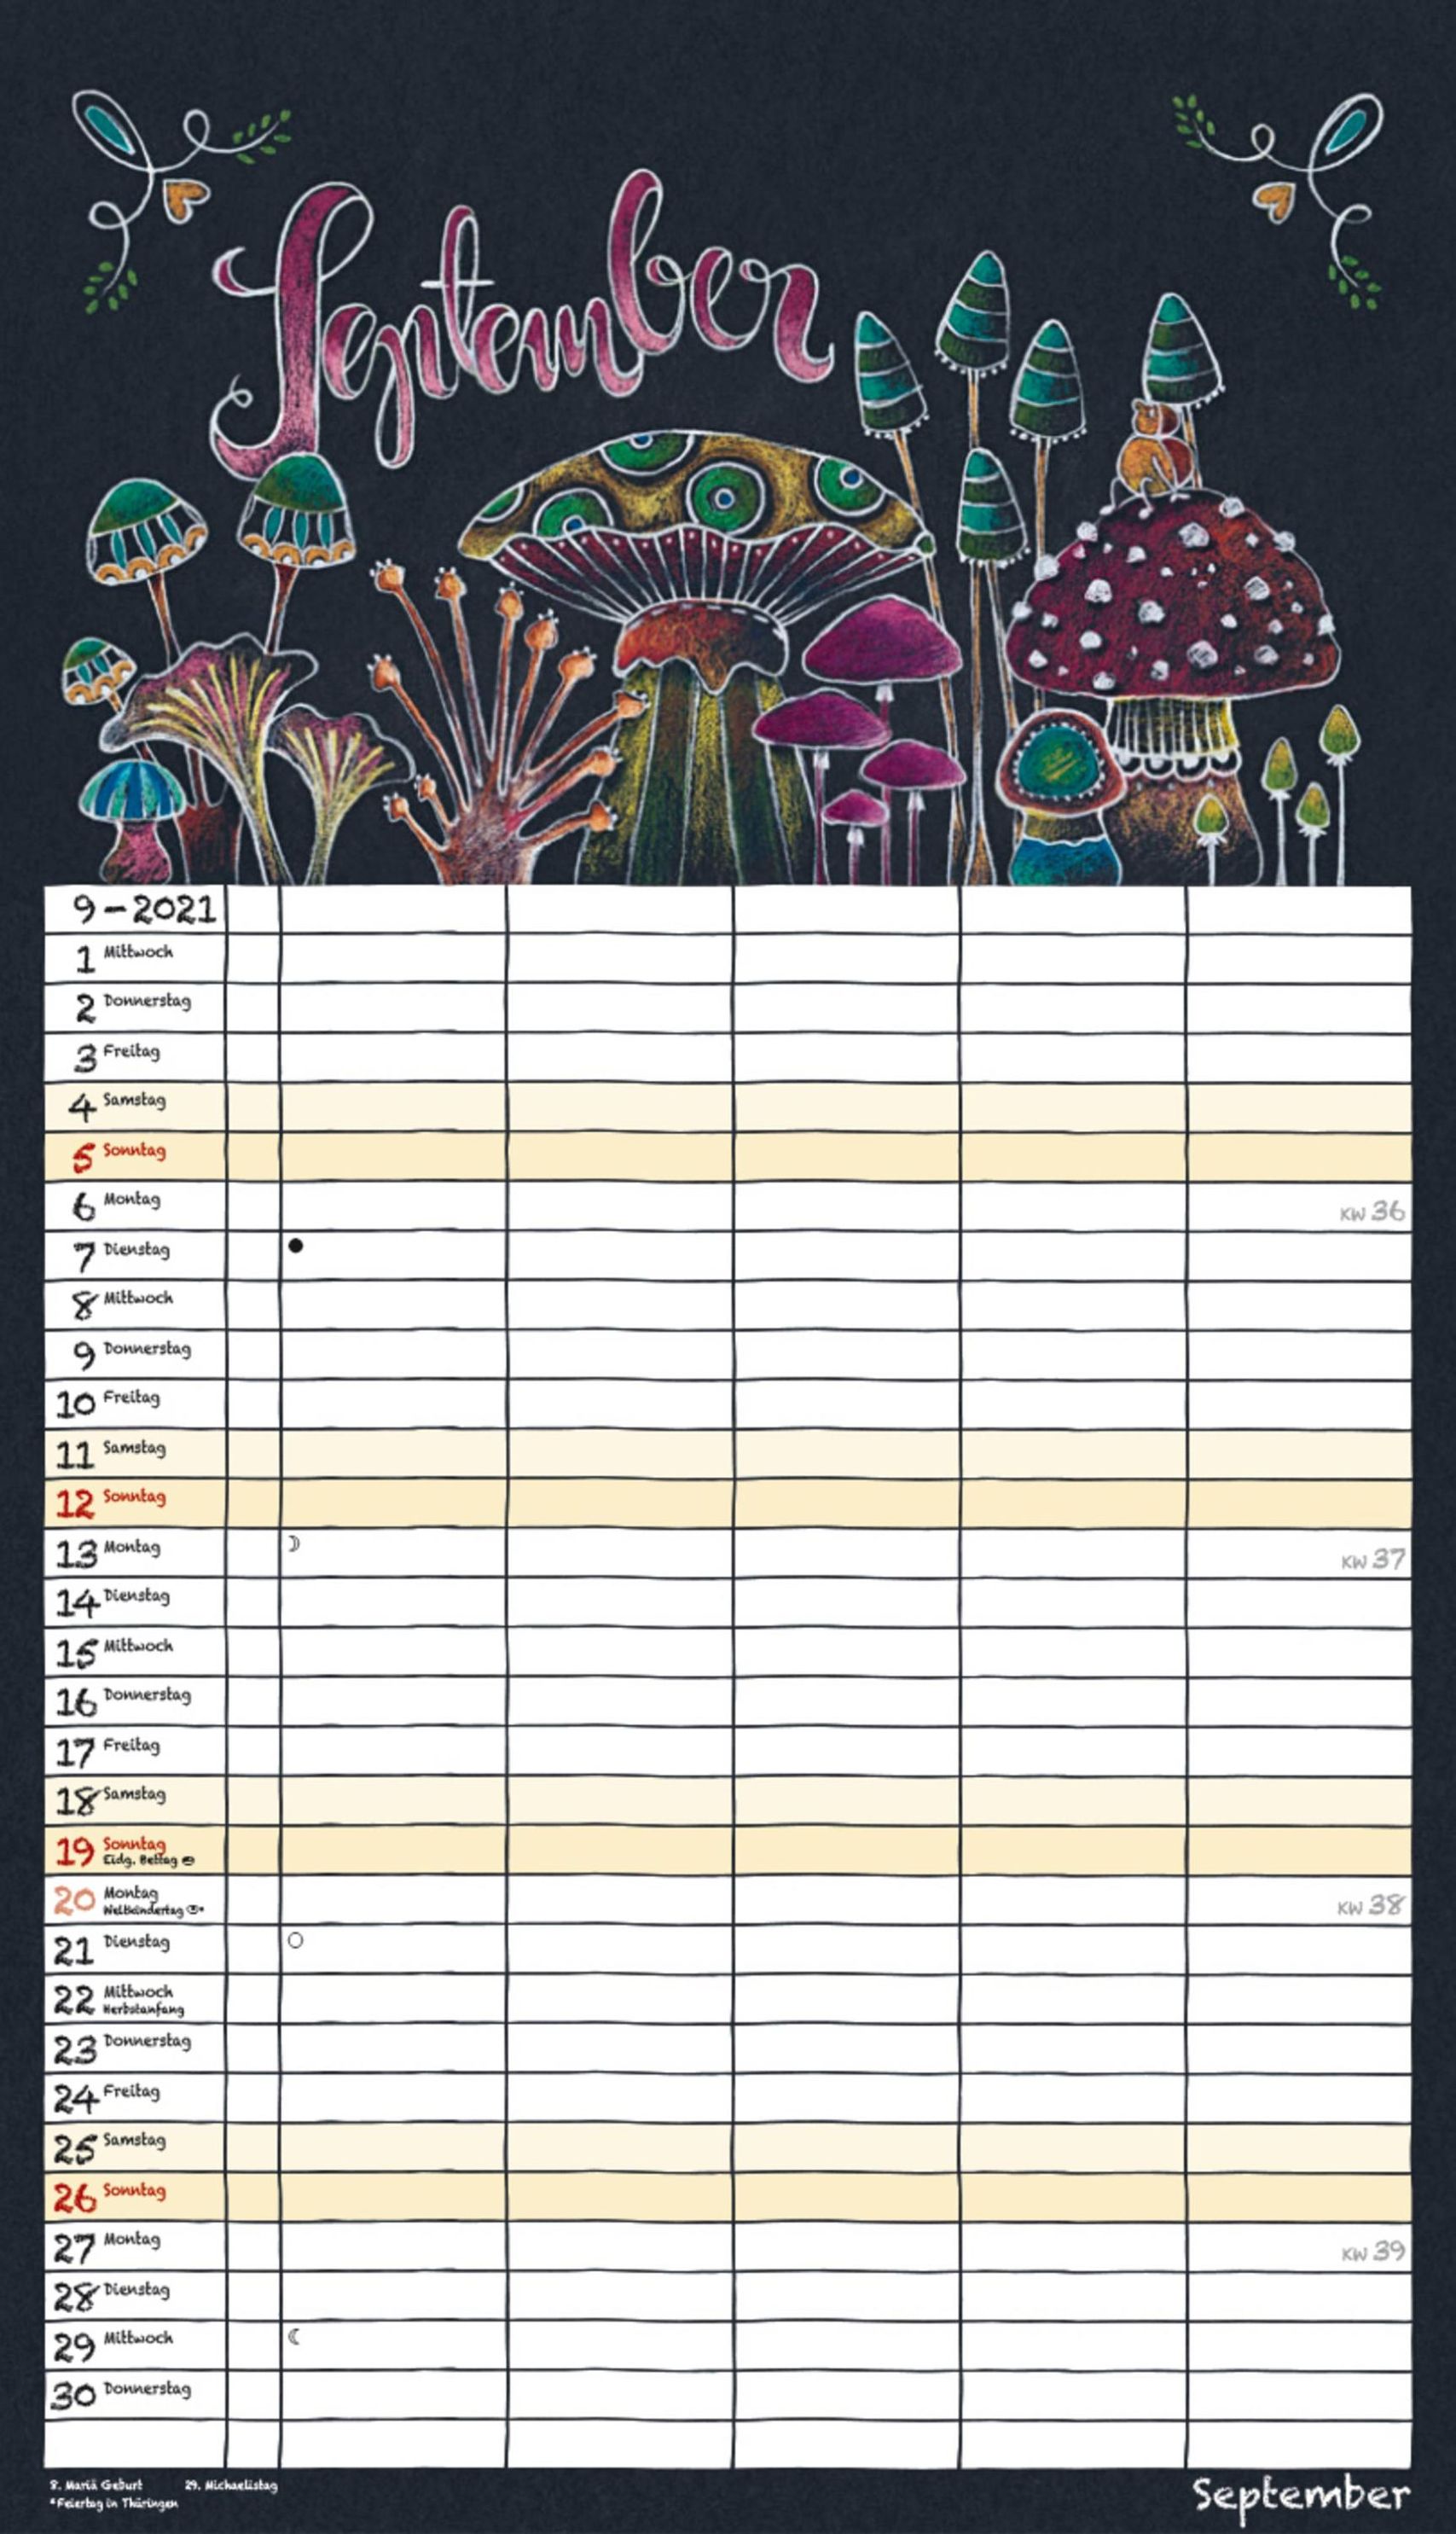 Lovely Chalk Timer 2021 - Kalender bei Weltbild.at bestellen